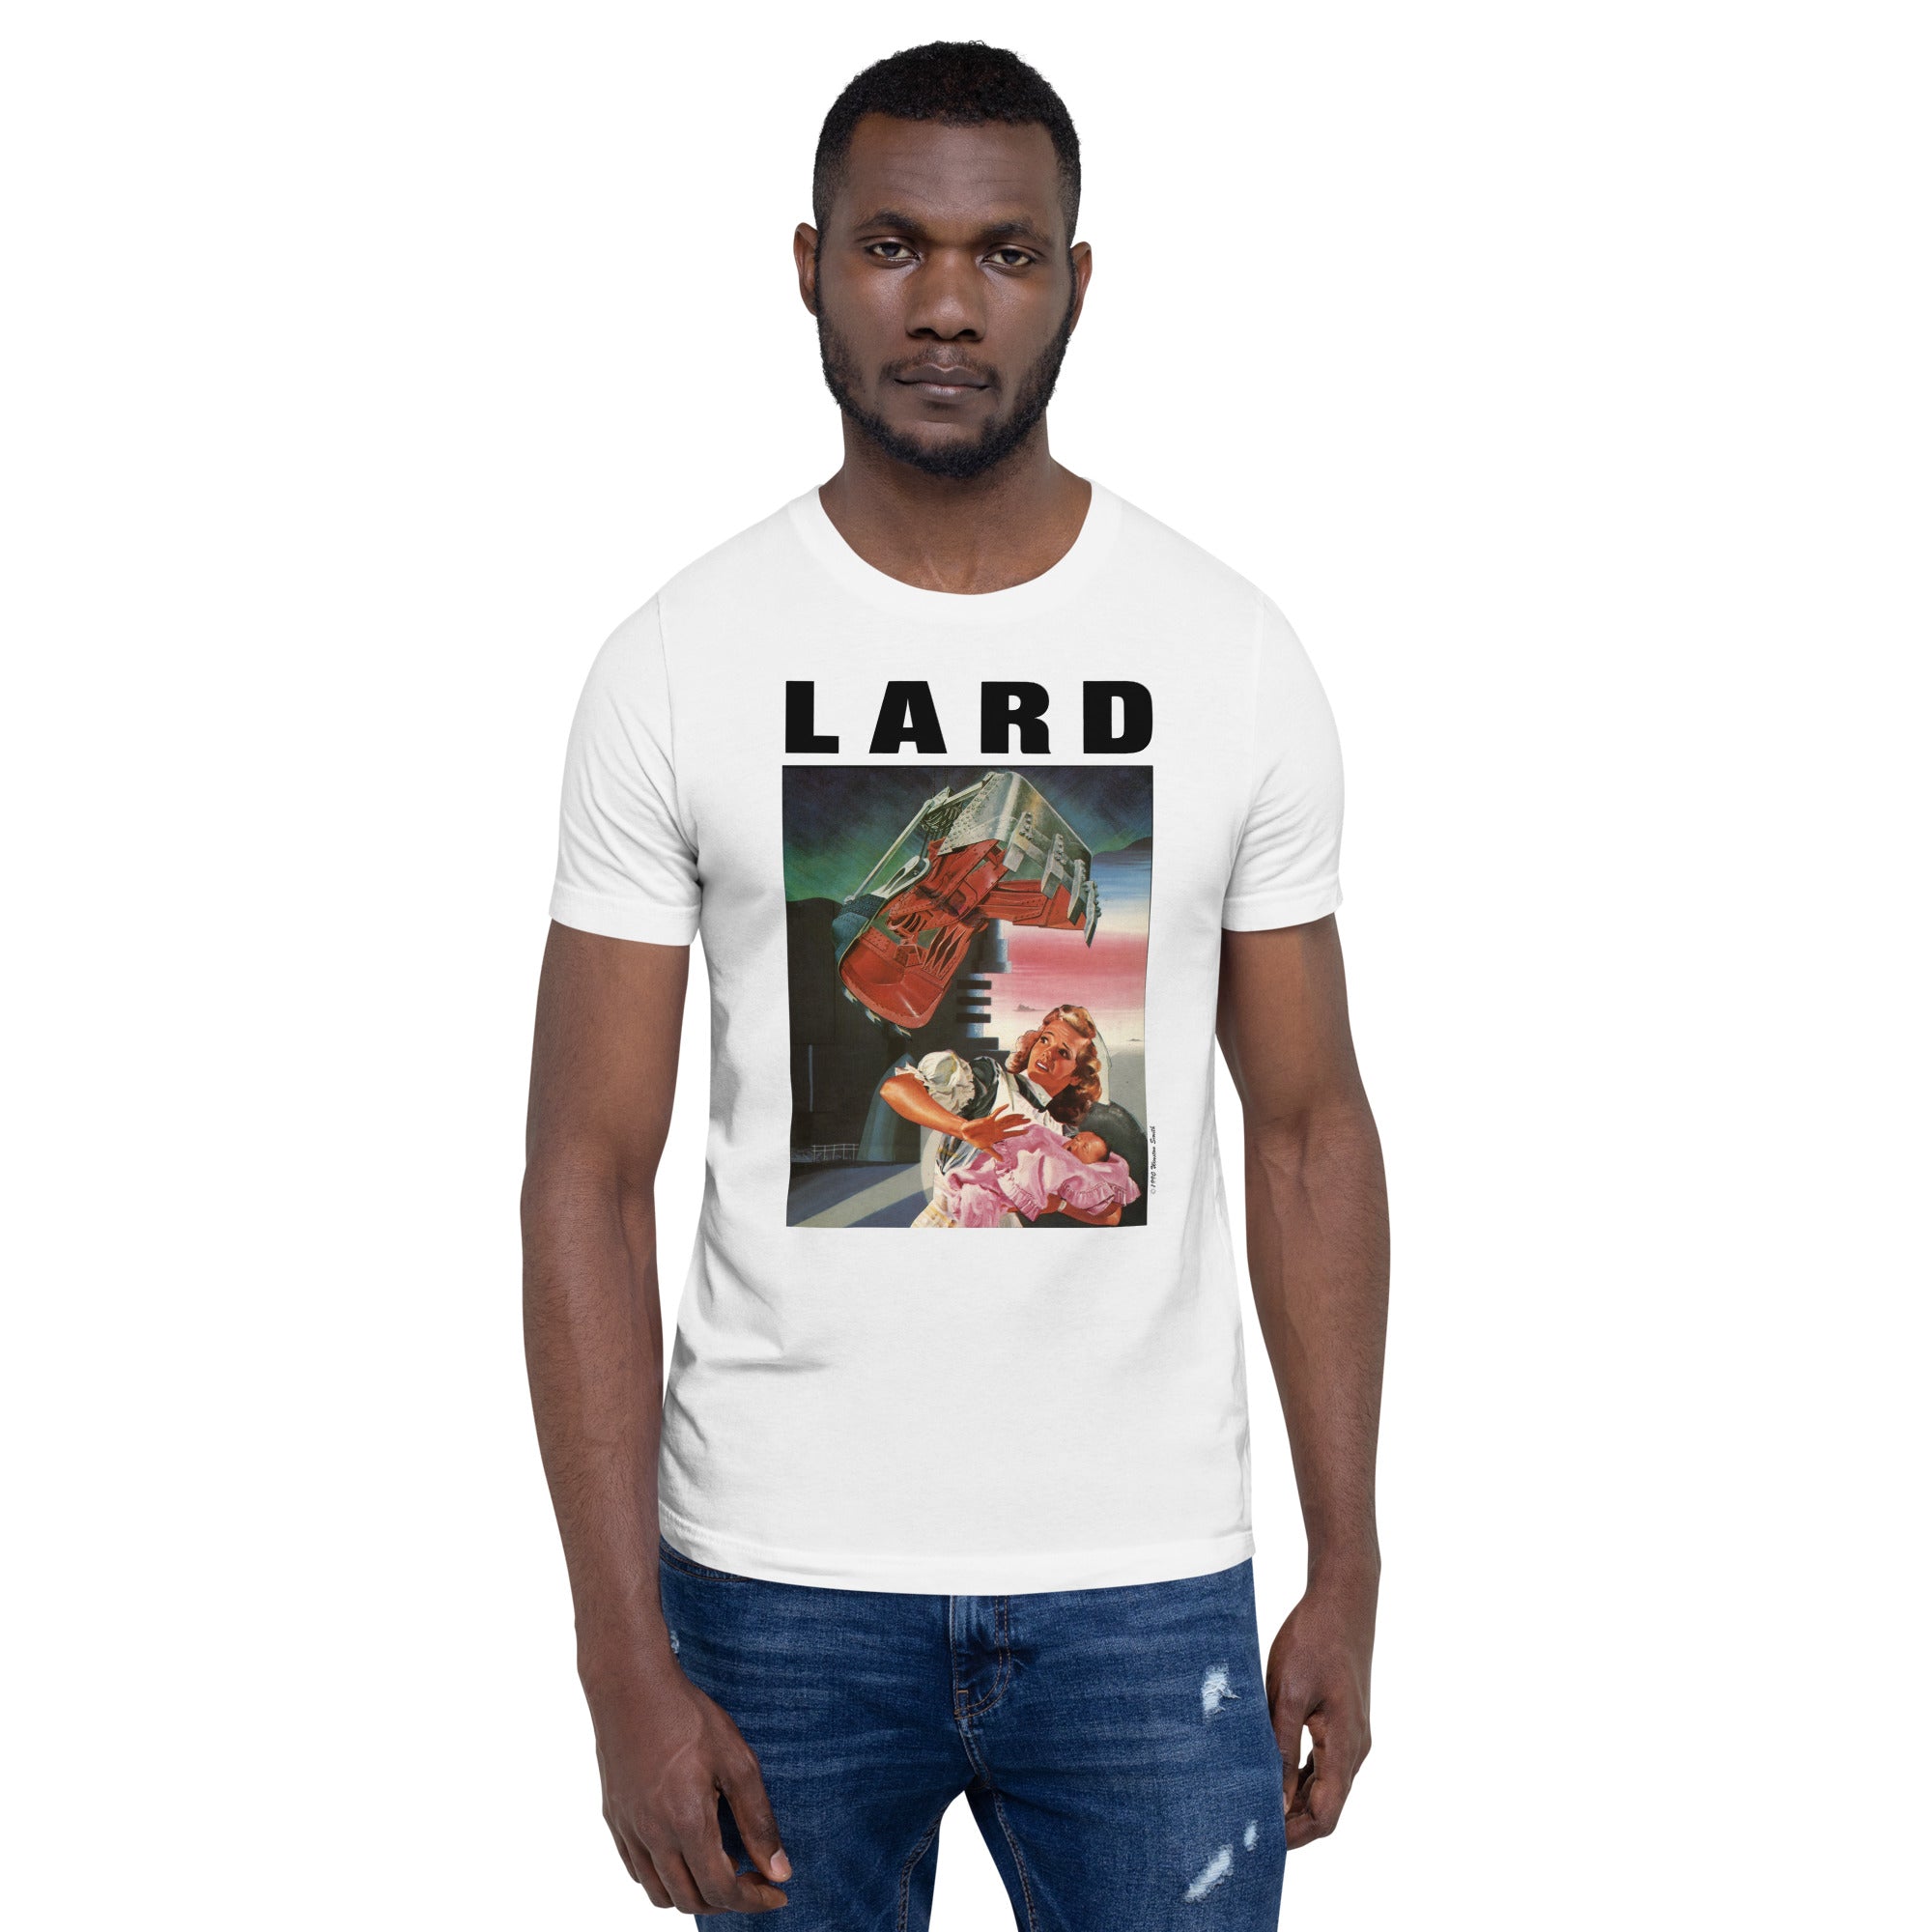 LARD "The Last Temptation Of Reid" Unisex White T-Shirt